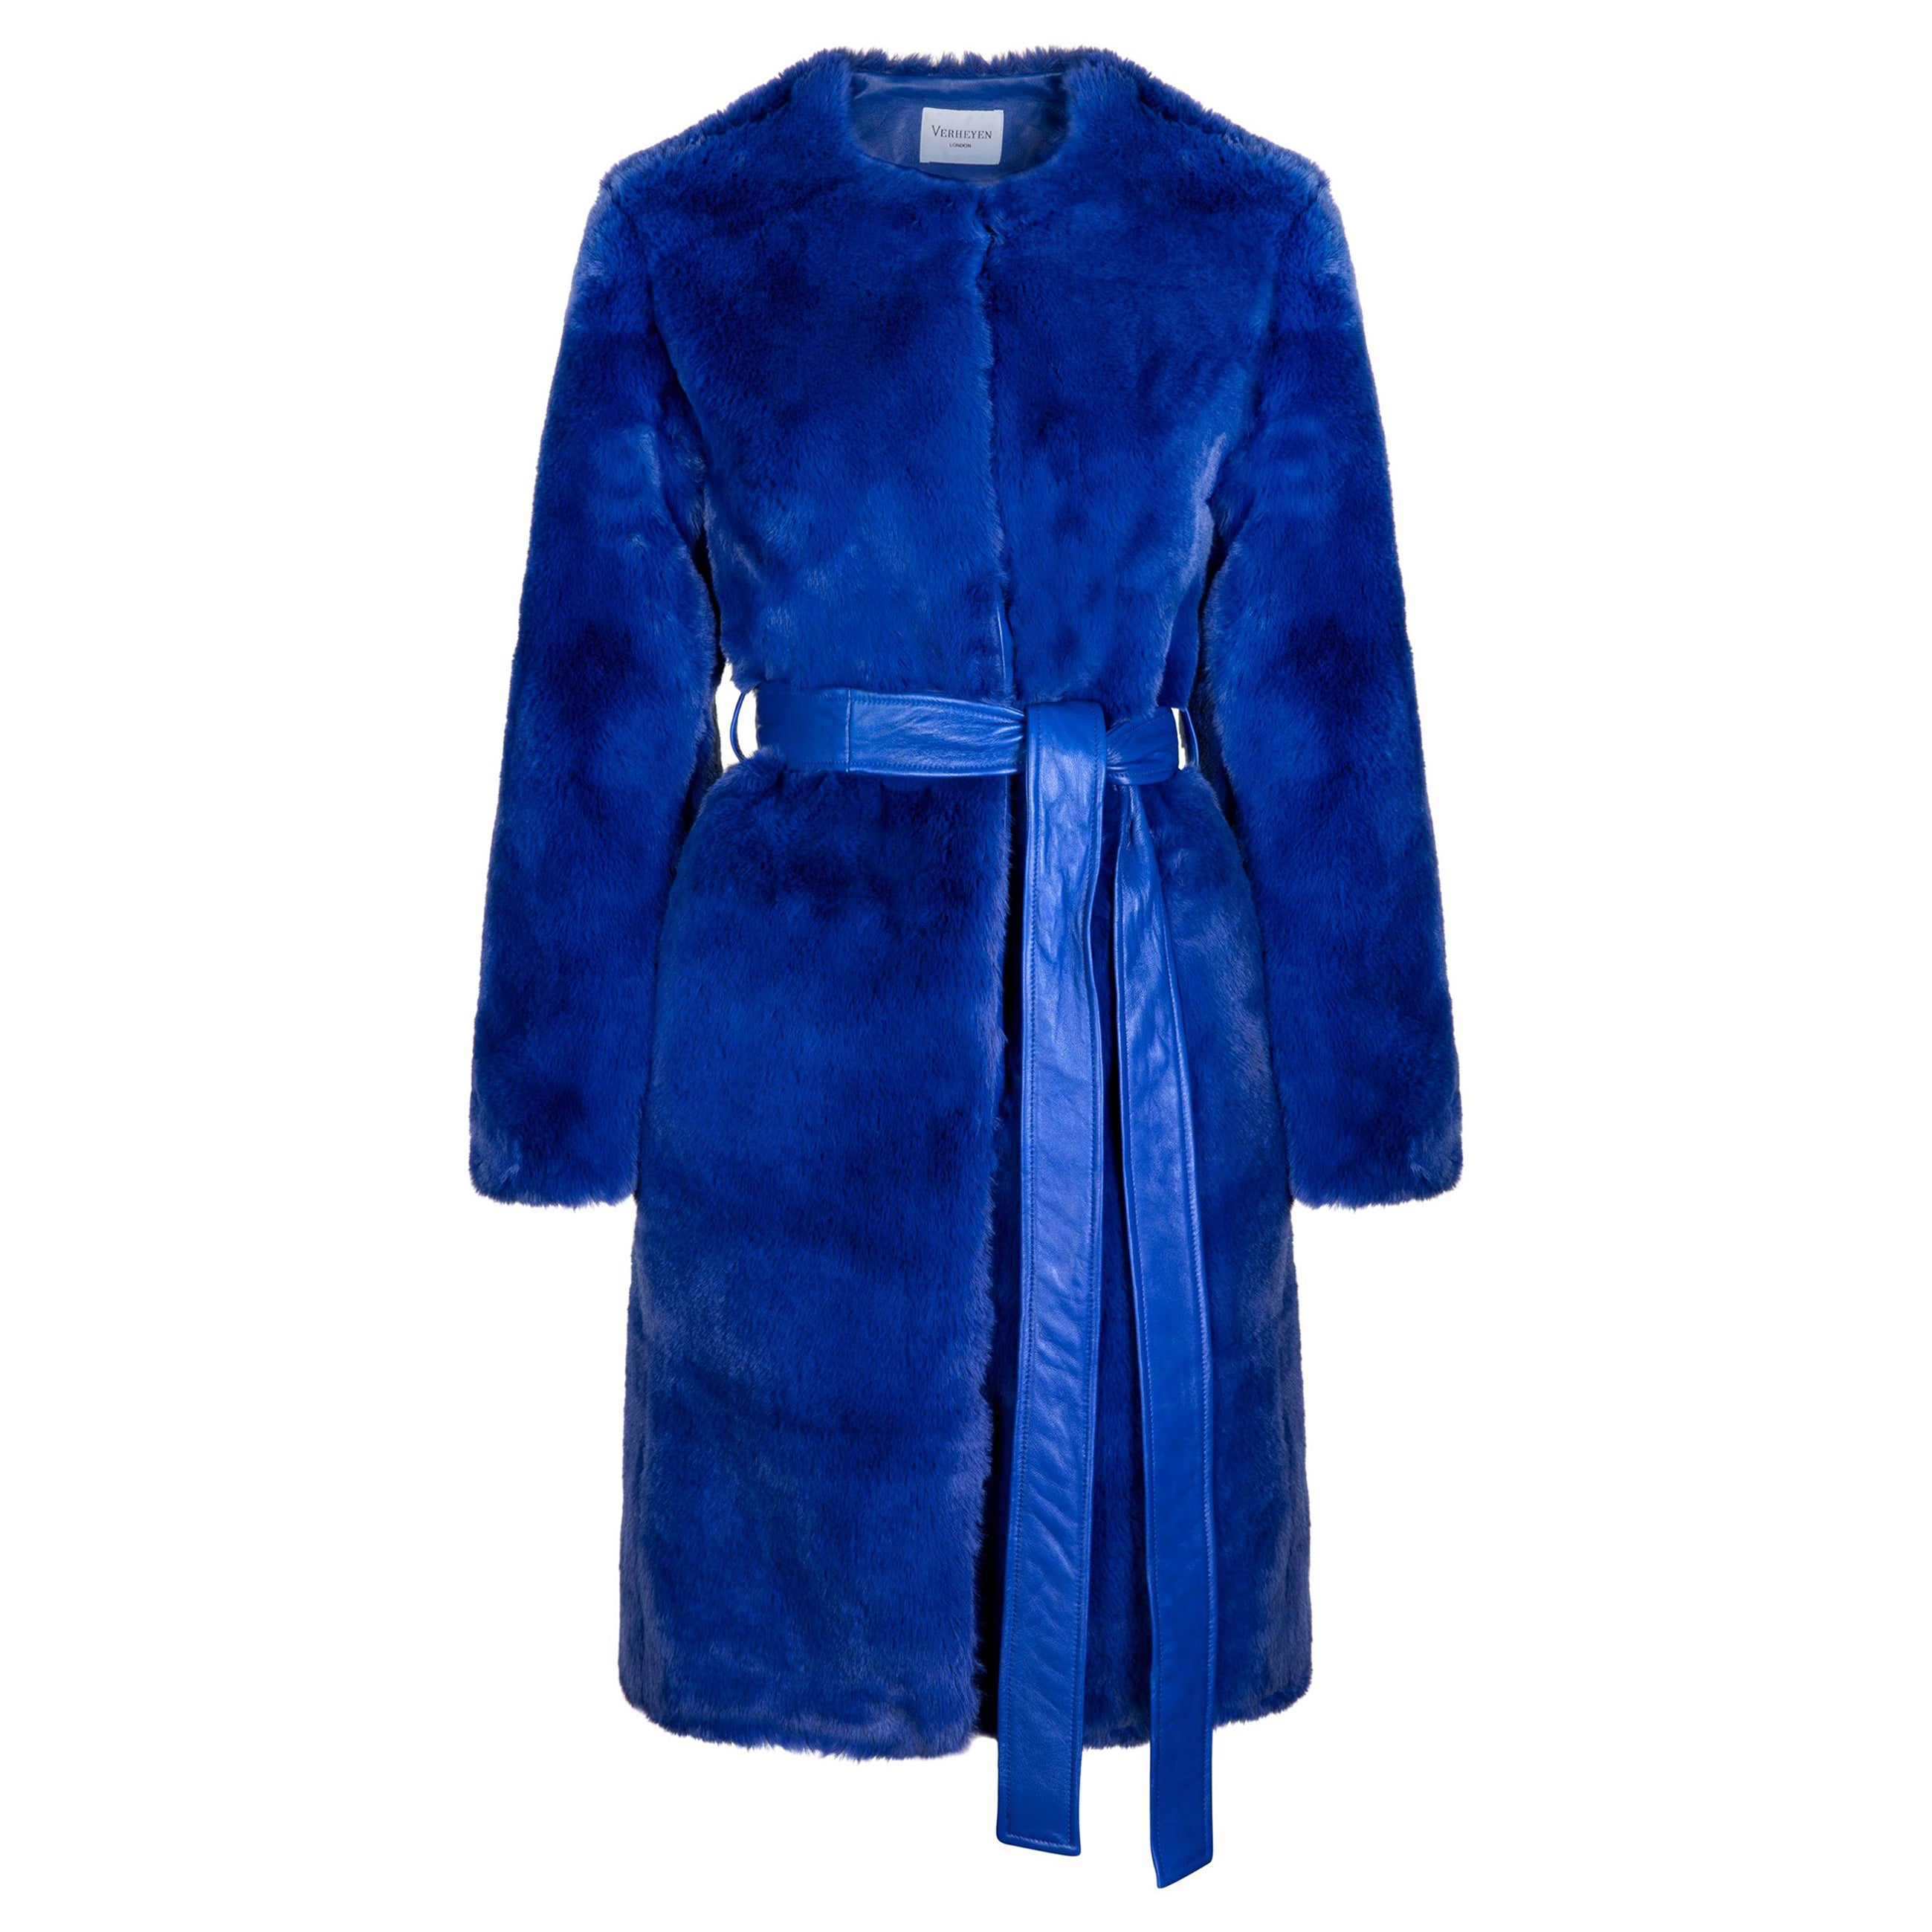 Verheyen London Serena  Collarless Faux Fur Coat in Blue - Size uk 10